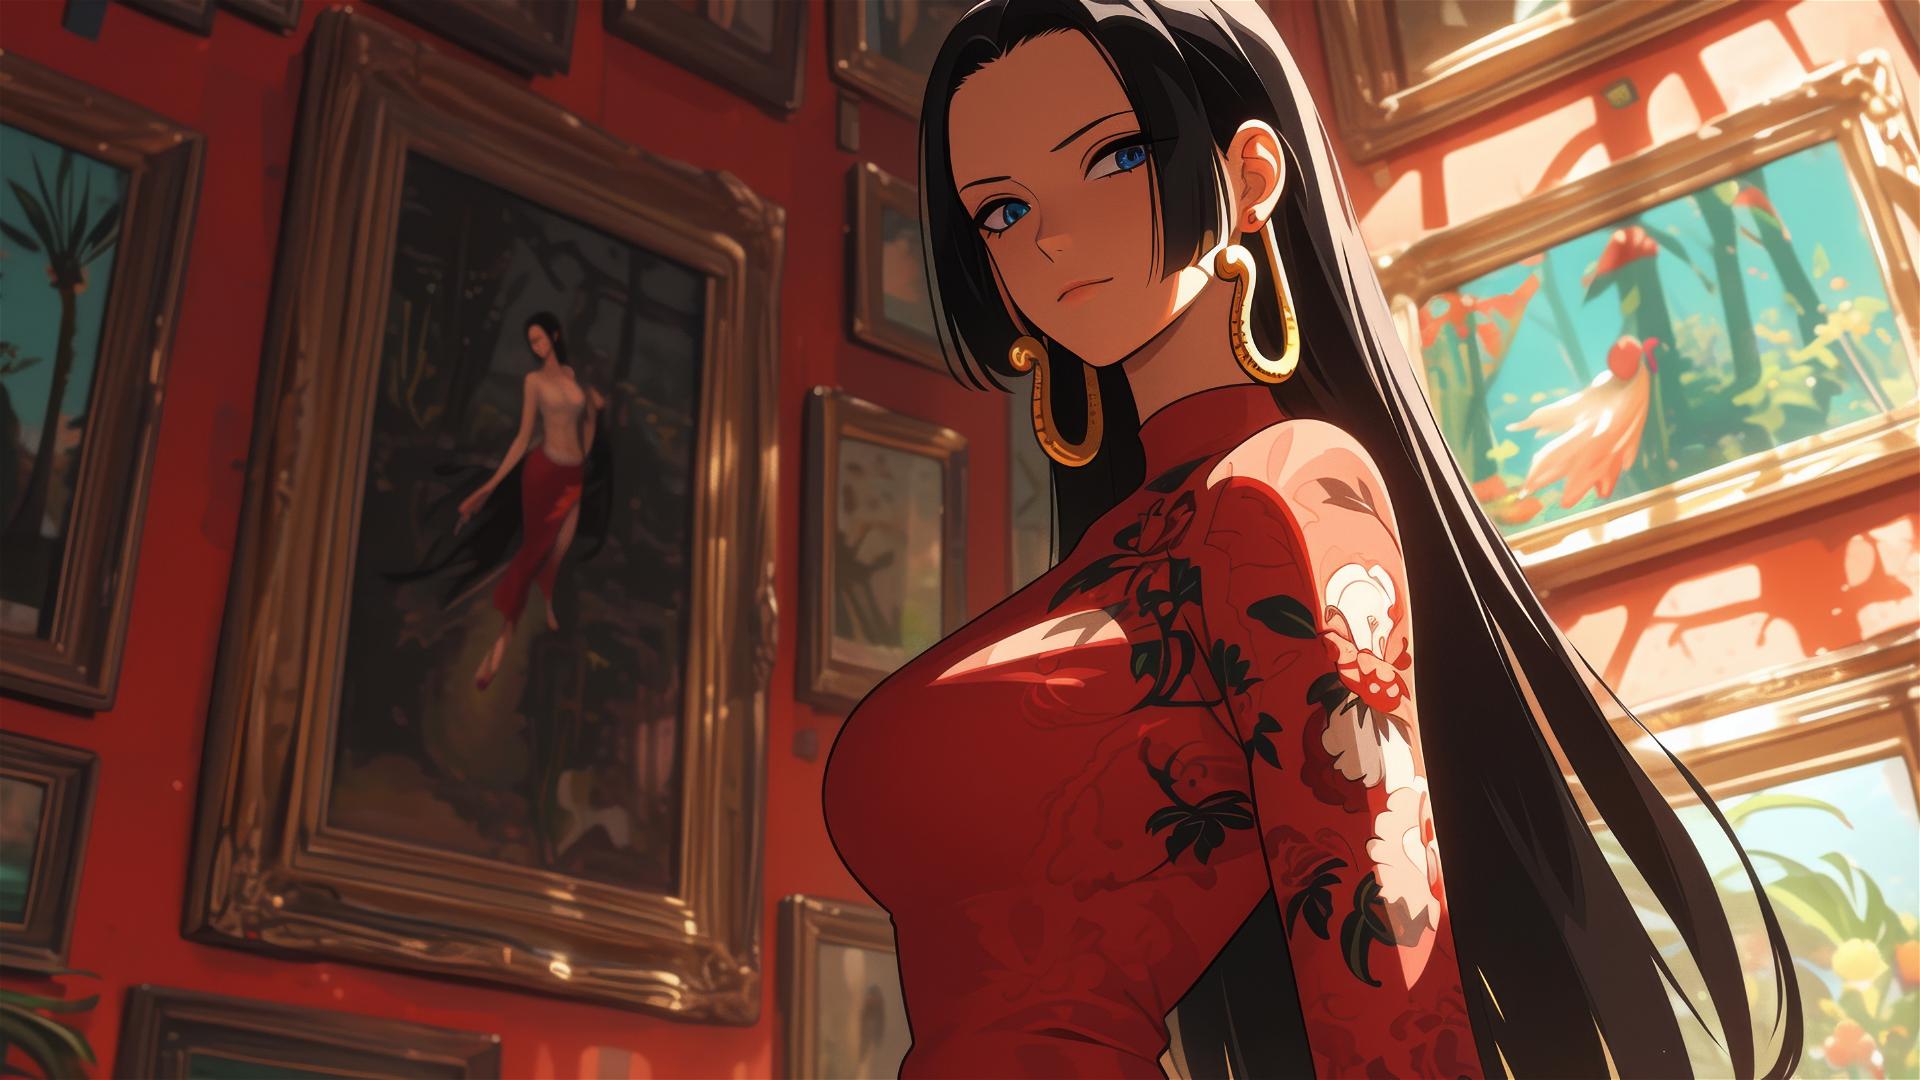 Boa Hancock from One Piece wandering through an art gallery under soft lighting